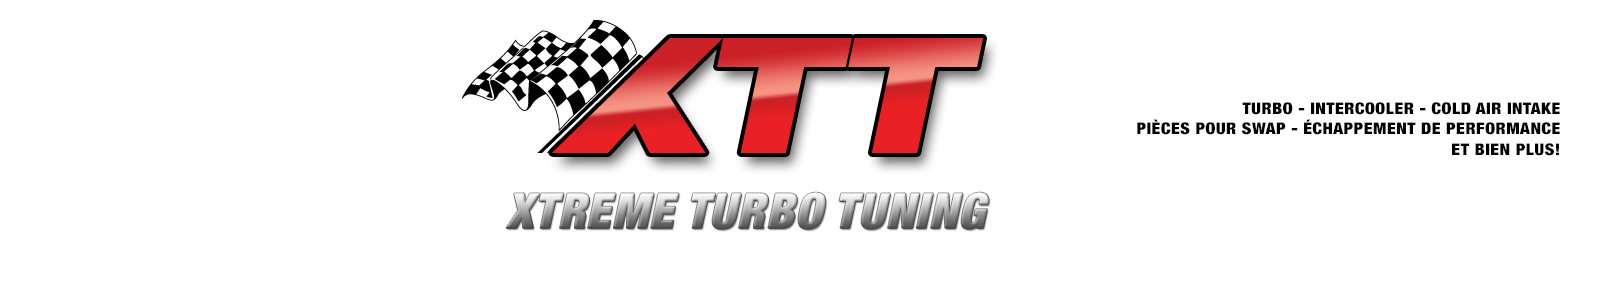 Xtreme - Turbo - Tuning - Performance - Honda - Acura - Jdm - Montreal